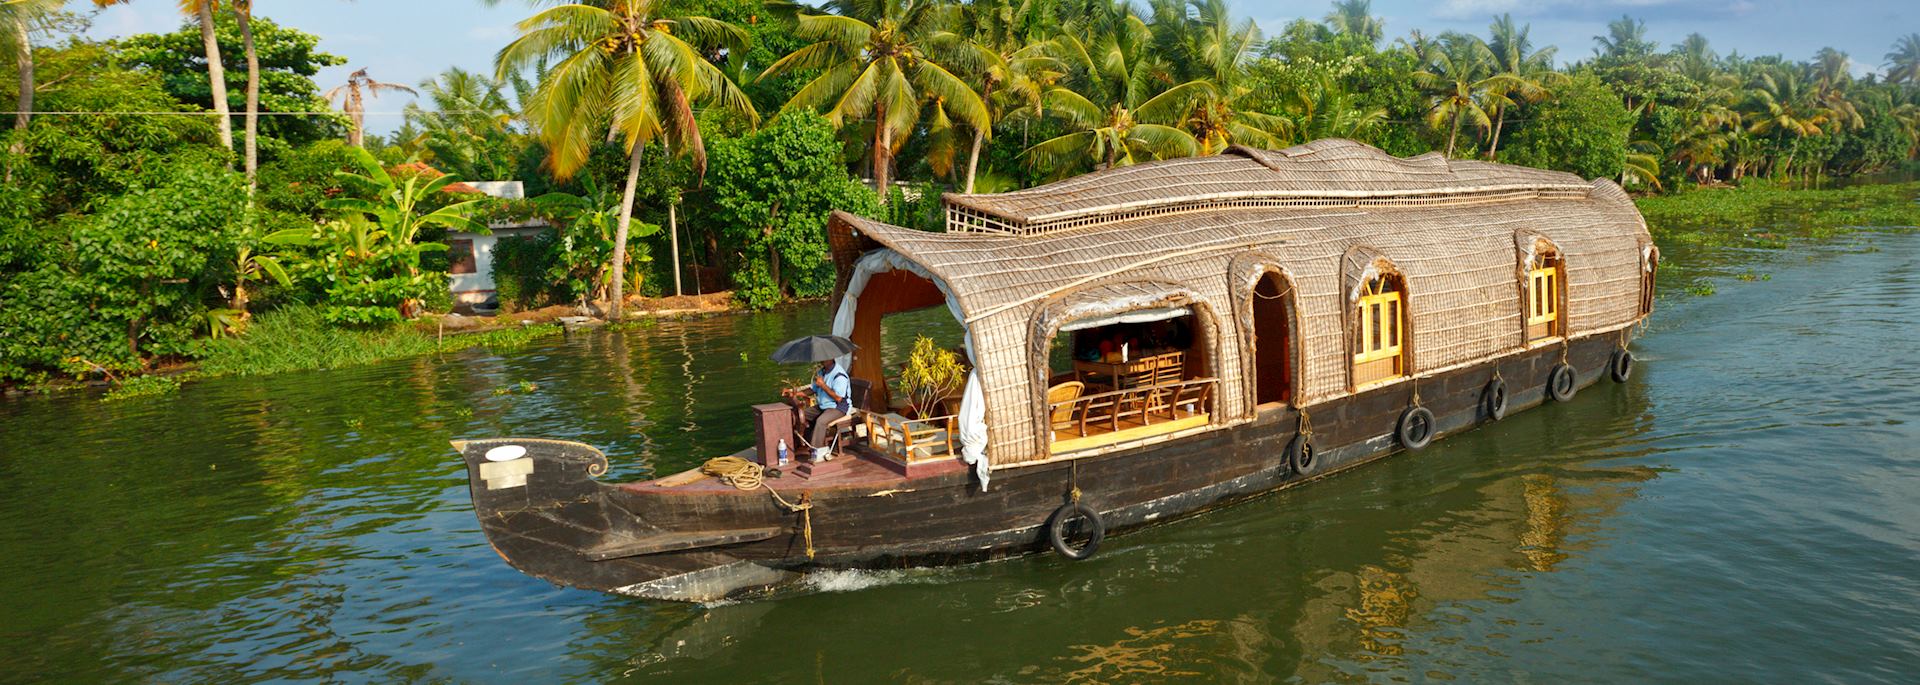 Houseboat sailing on Kerala's Backwaters